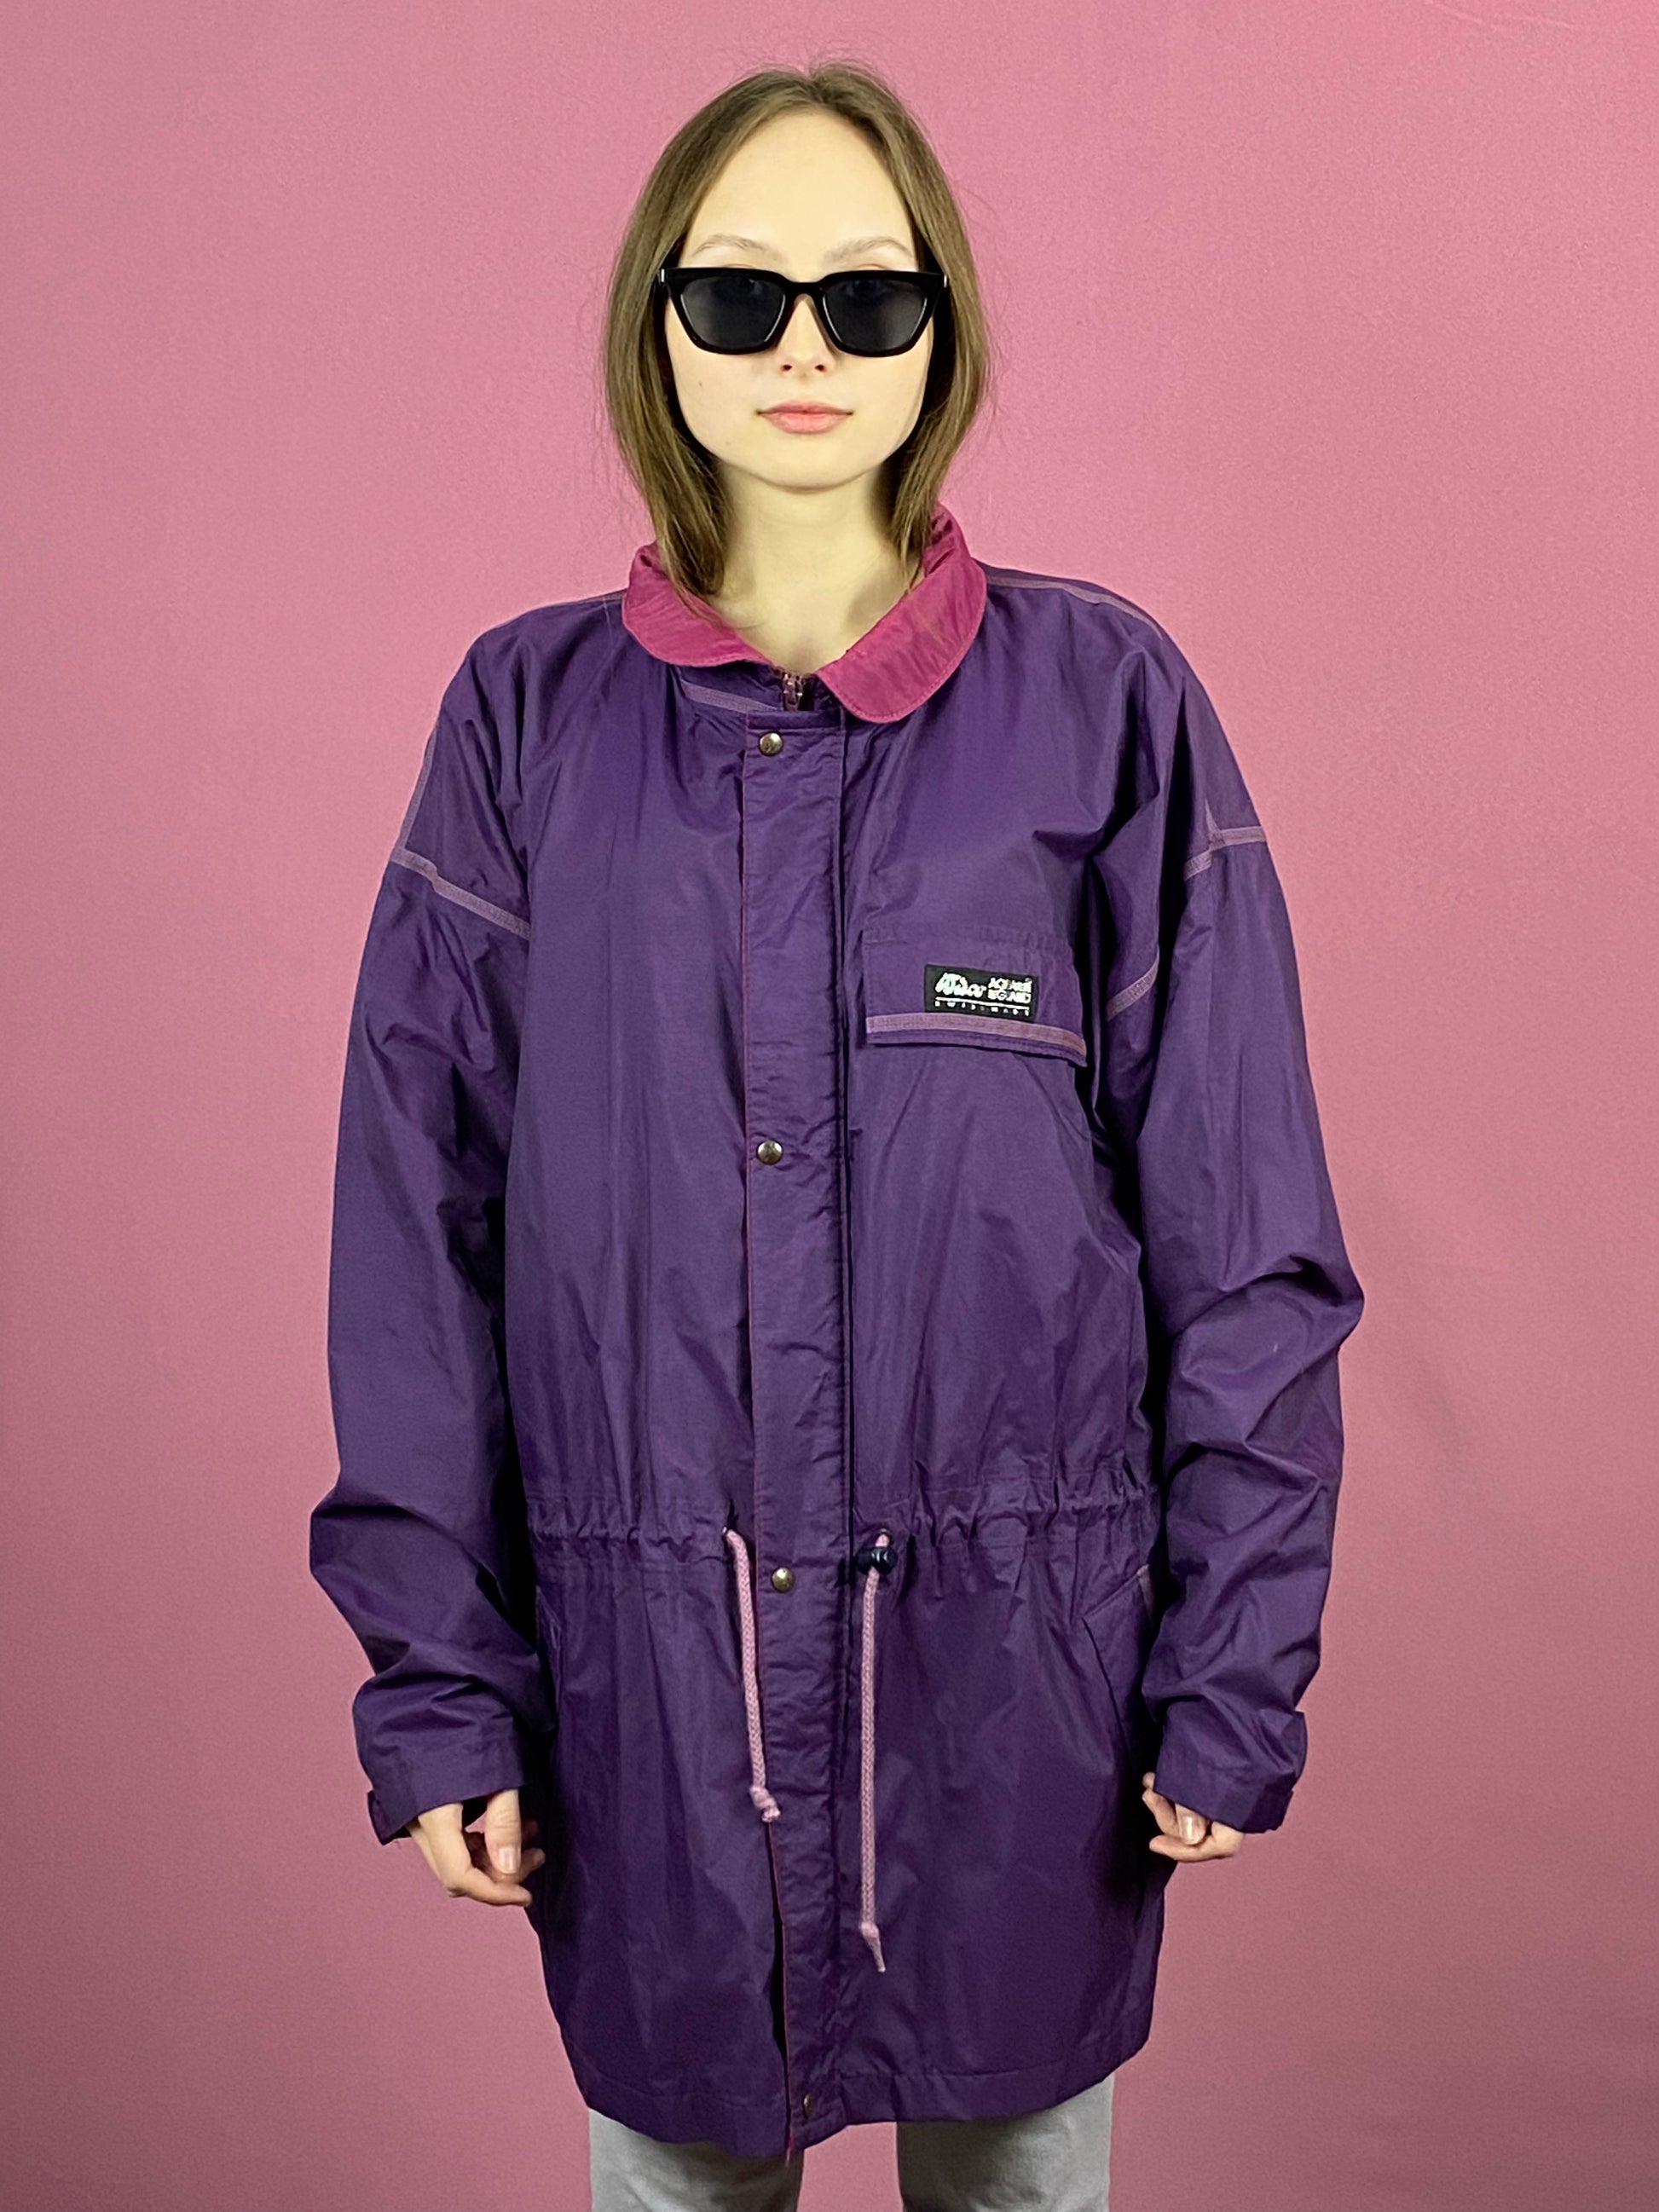 90s Aqua Guard Vintage Women's Raincoat - Large Purple Nylon